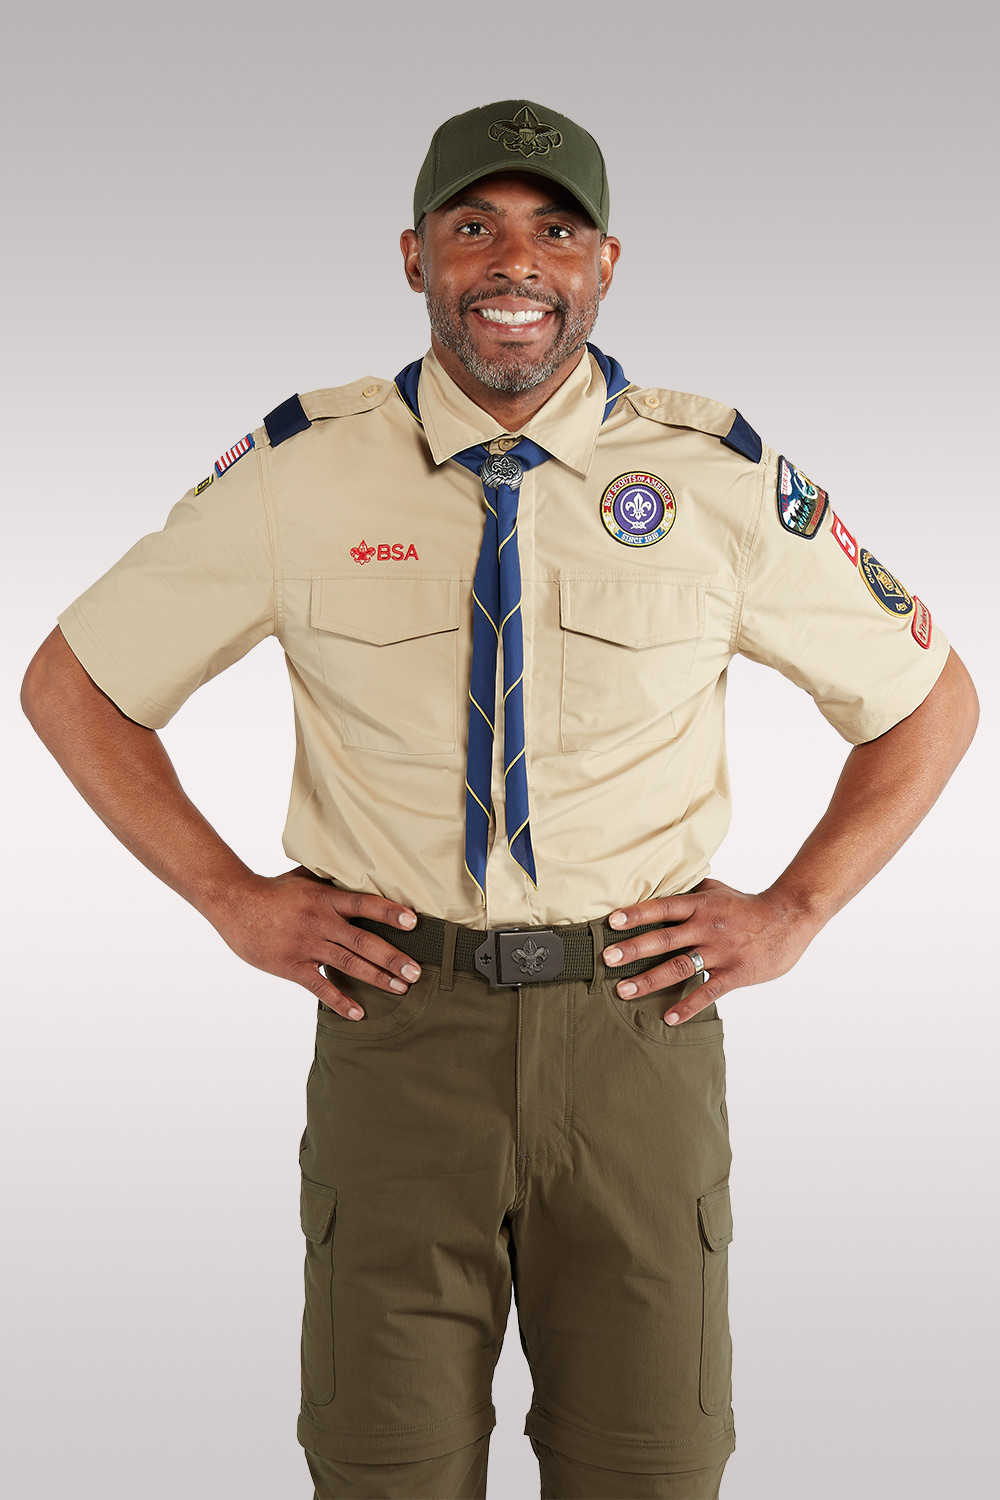 Boy Scouts of America Uniforms: A Brief History